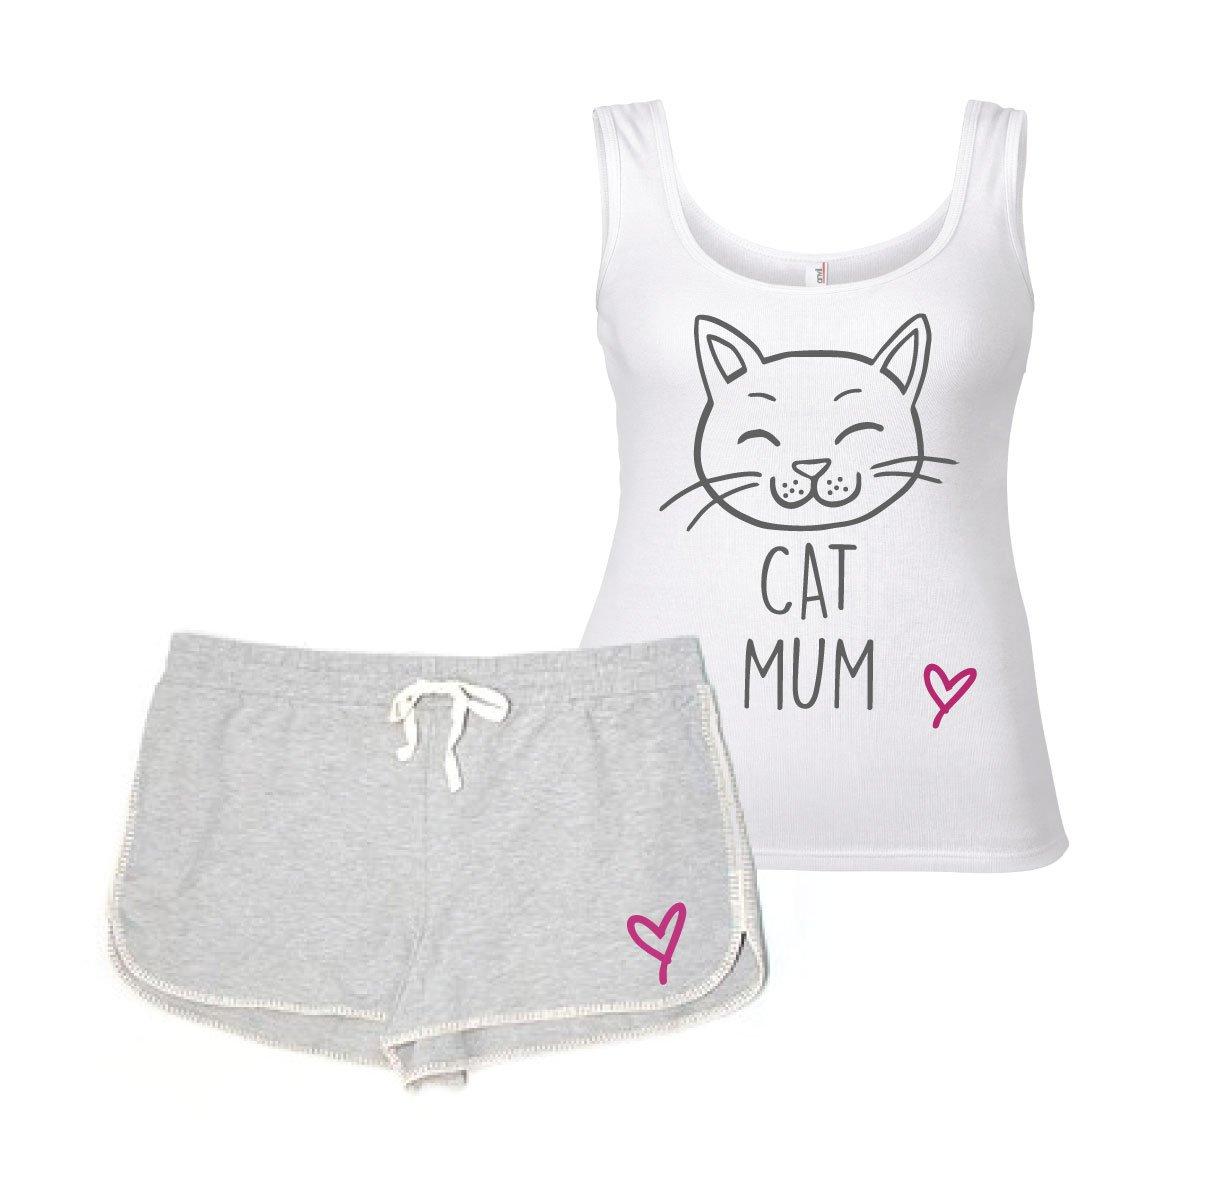 Cat Mum Pyjama Set Cat PJ's Loungewear Lounge Wear Grey and White